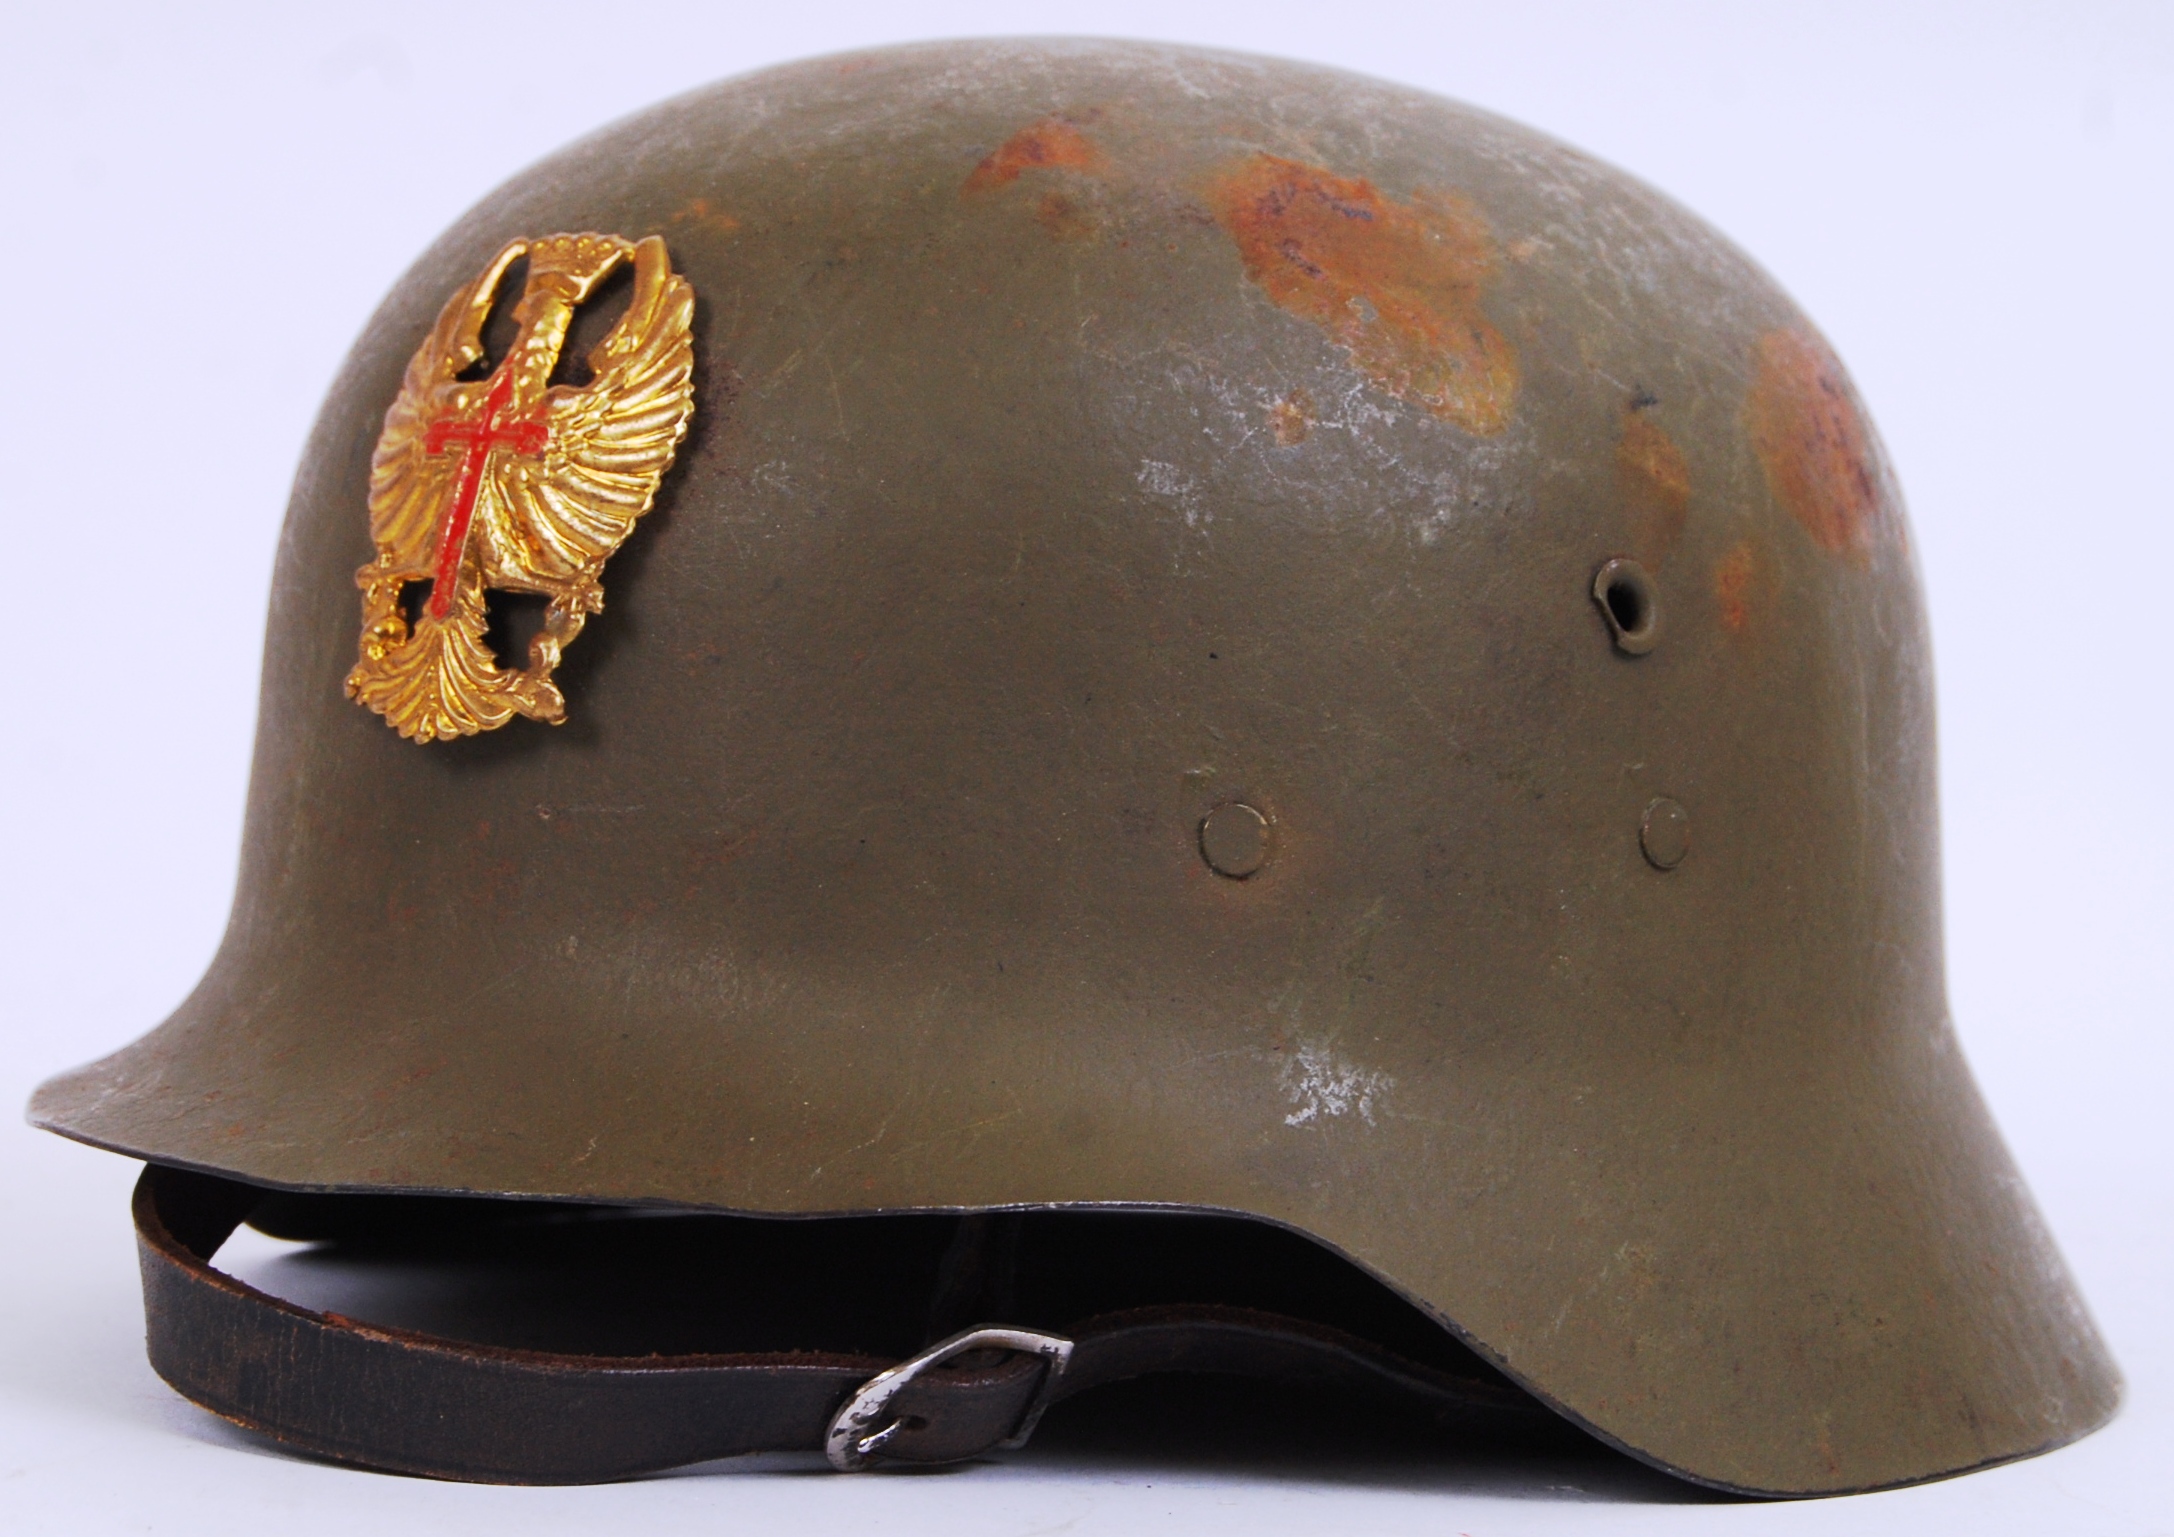 A SPANISH CIVIL WAR (M-42) STEEL HELMET bearing a Civil War brass helmet badge to front,